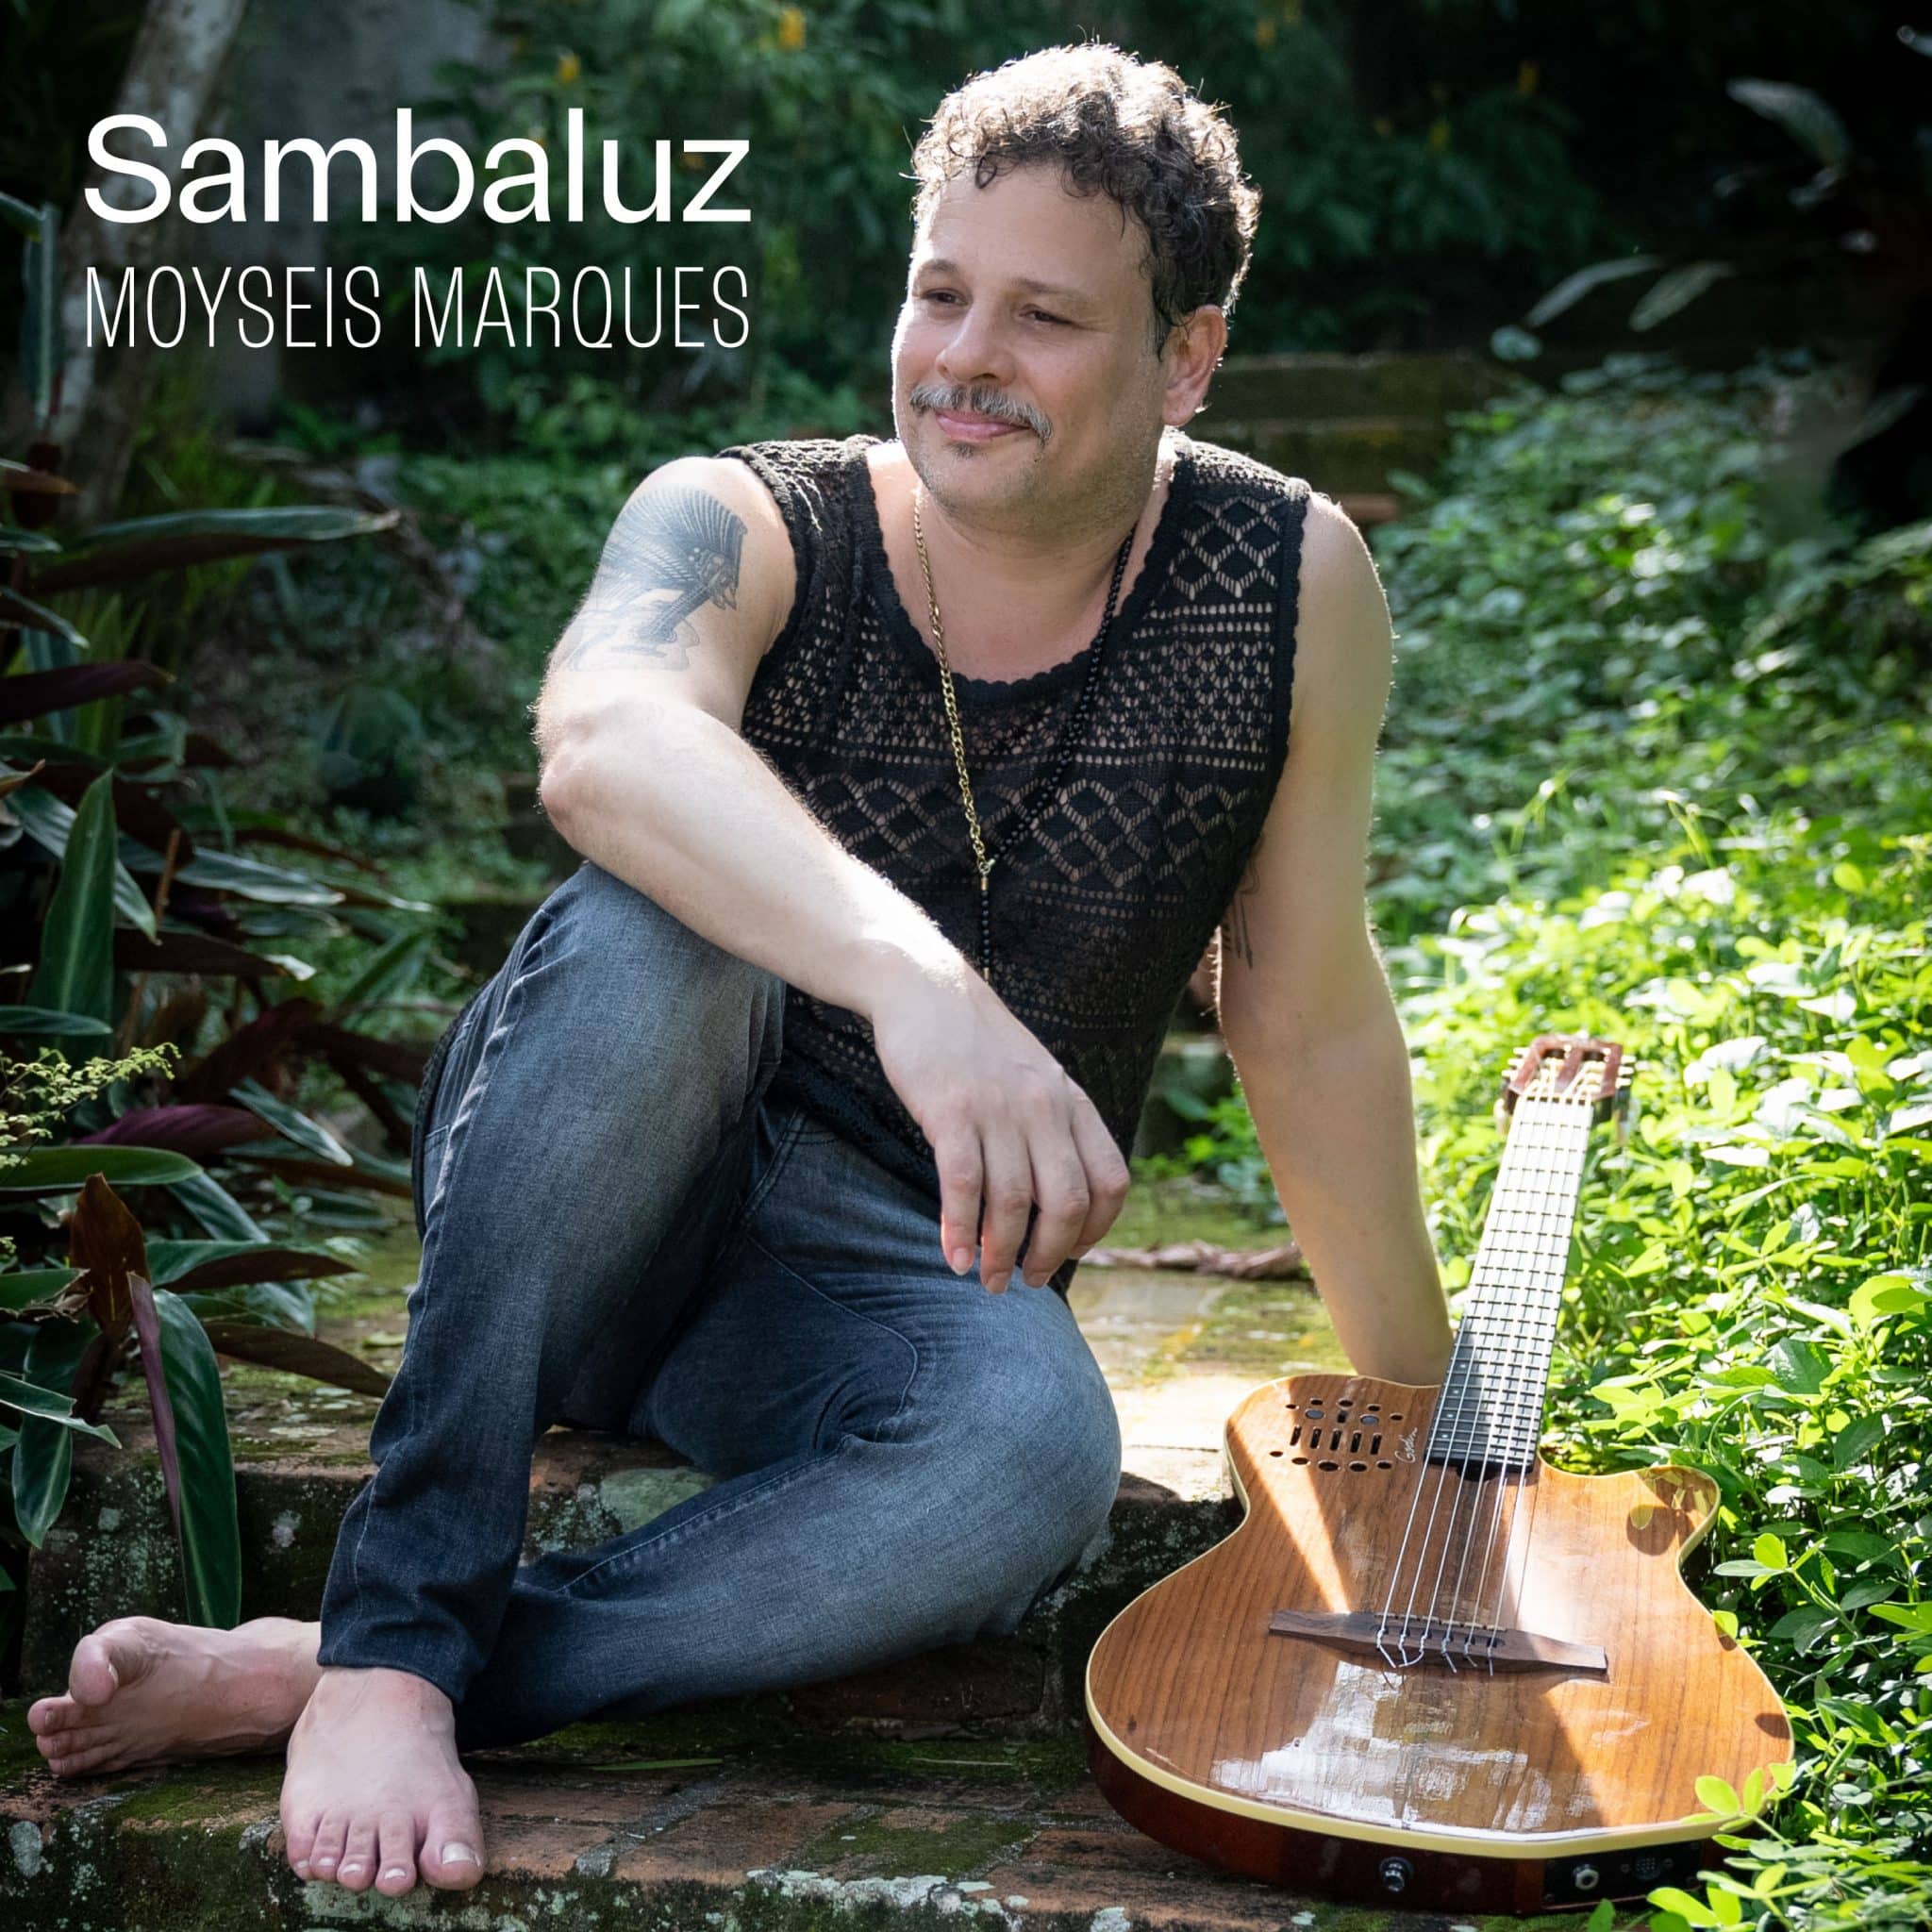 revistaprosaversoearte.com - Single 'Sambaluz' anuncia novo álbum de Moyseis Marques